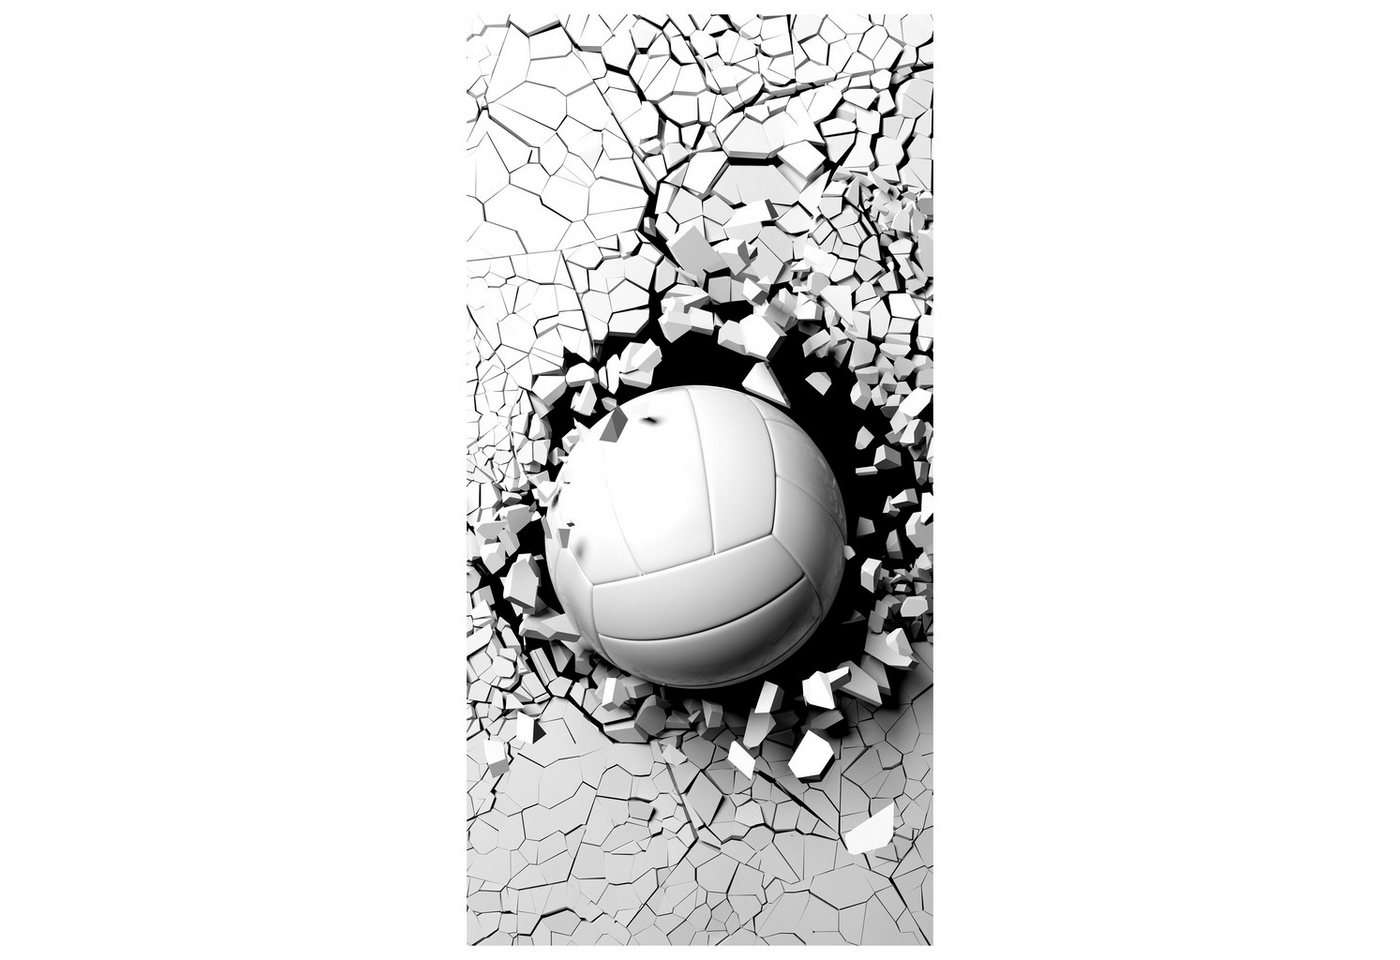 wandmotiv24 Türtapete Volleyball durch Wand, 3D Motiv, Sport, strukturiert, Fototapete, Wandtapete, Motivtapete, matt, selbstklebende Vinyltapete von wandmotiv24